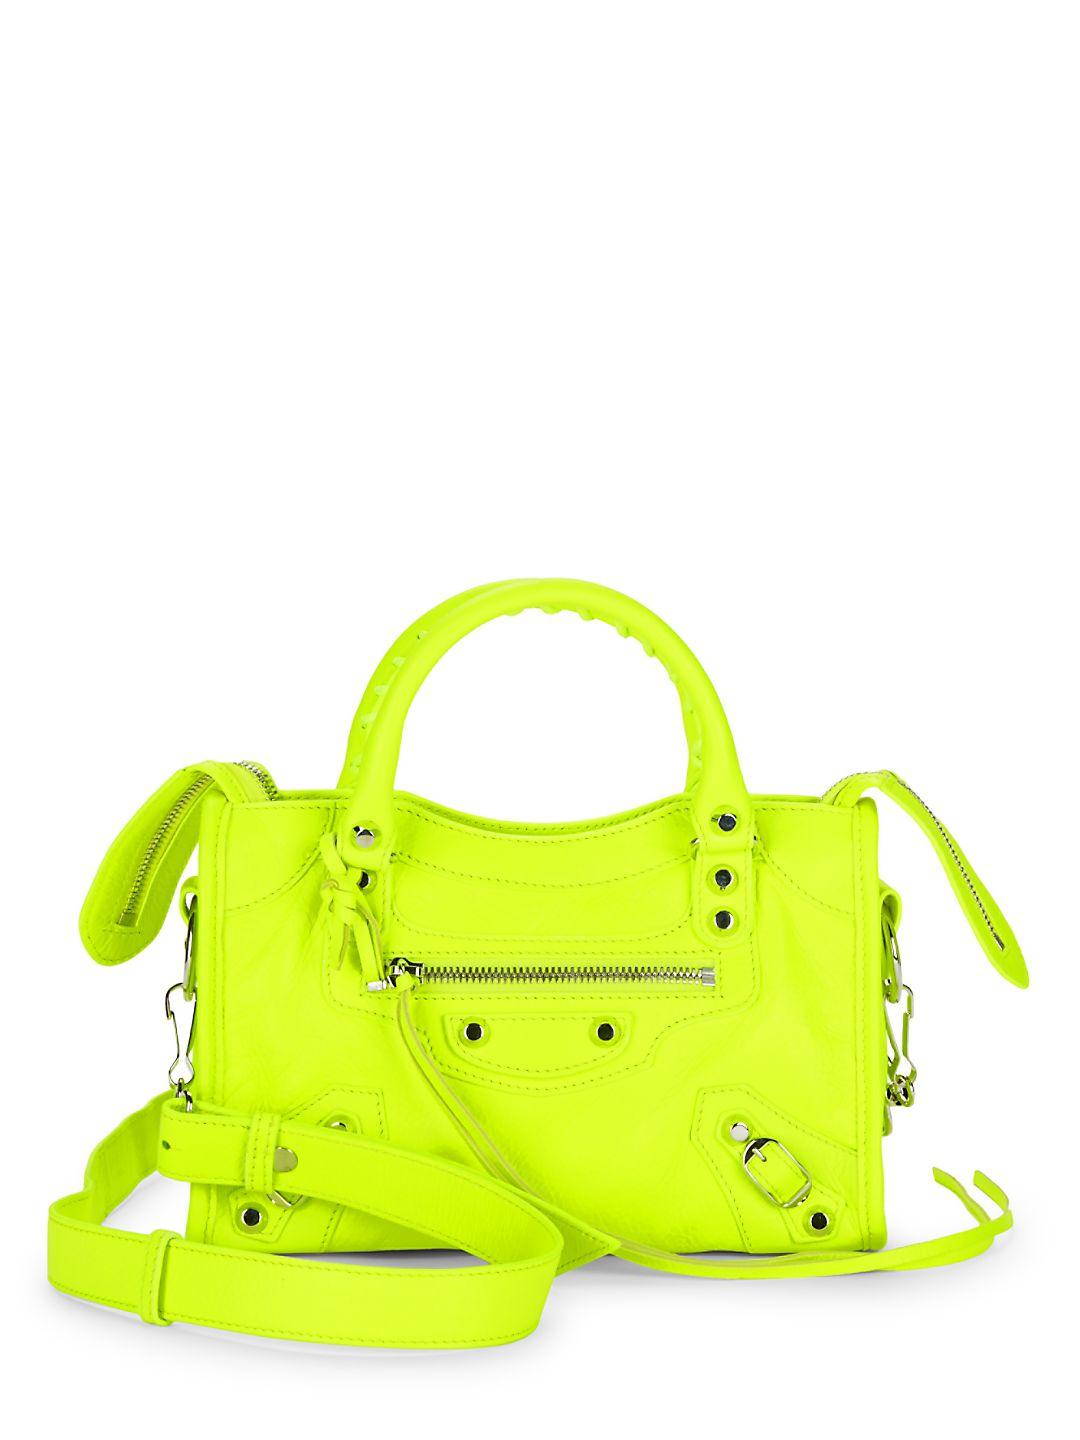 Lyst - Balenciaga Neon Leather Bag